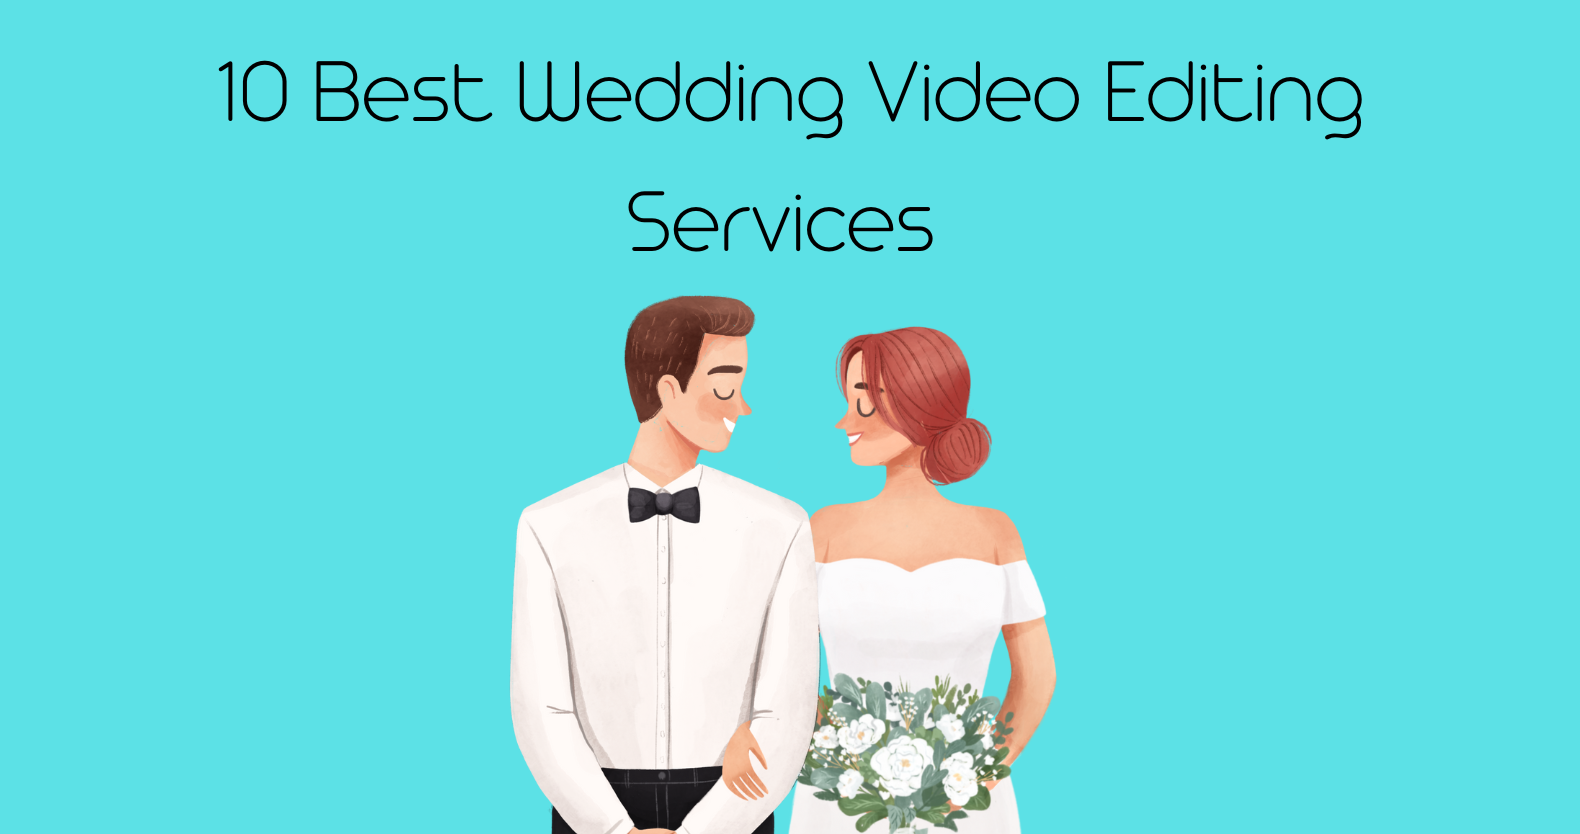 10 Best Wedding Video Editing Services